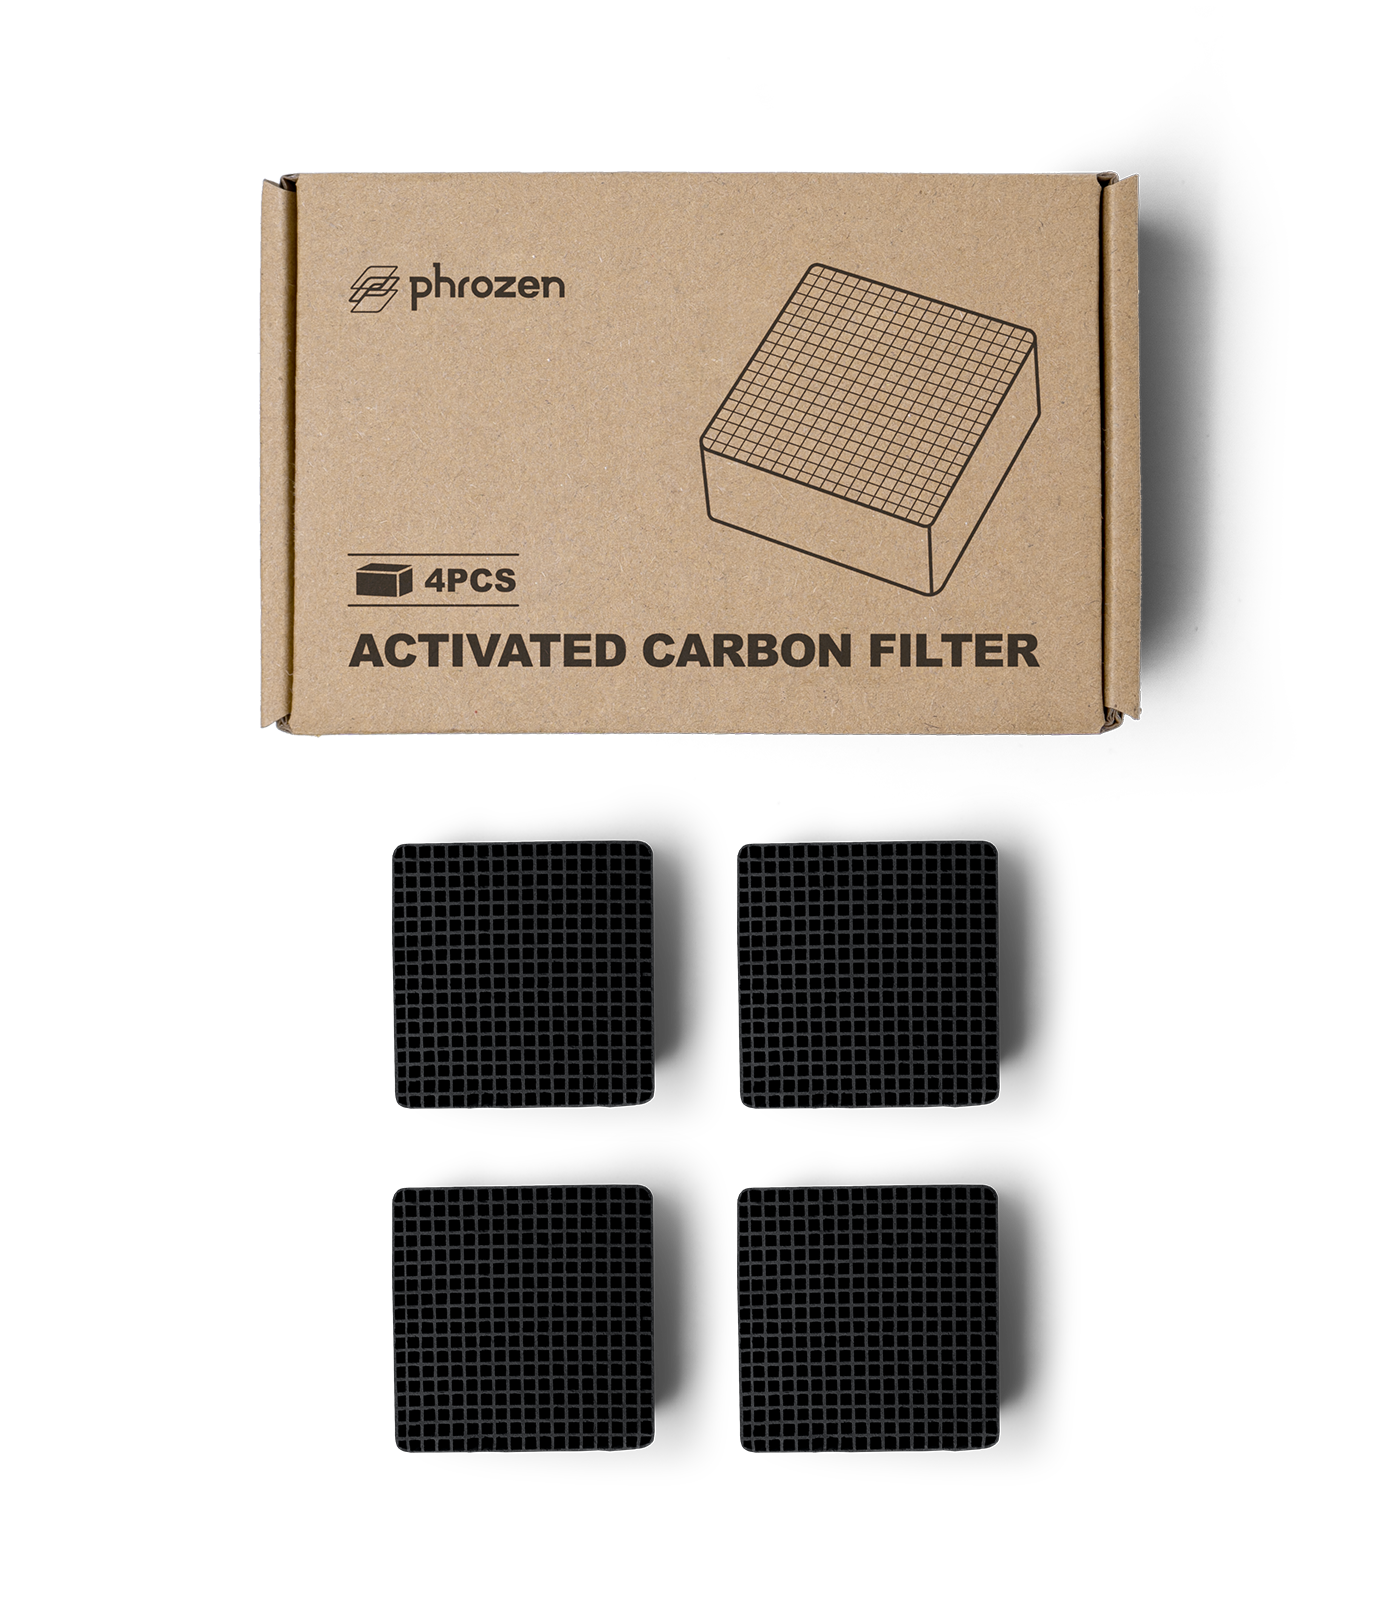 Phrozen Activated Carbon Filter